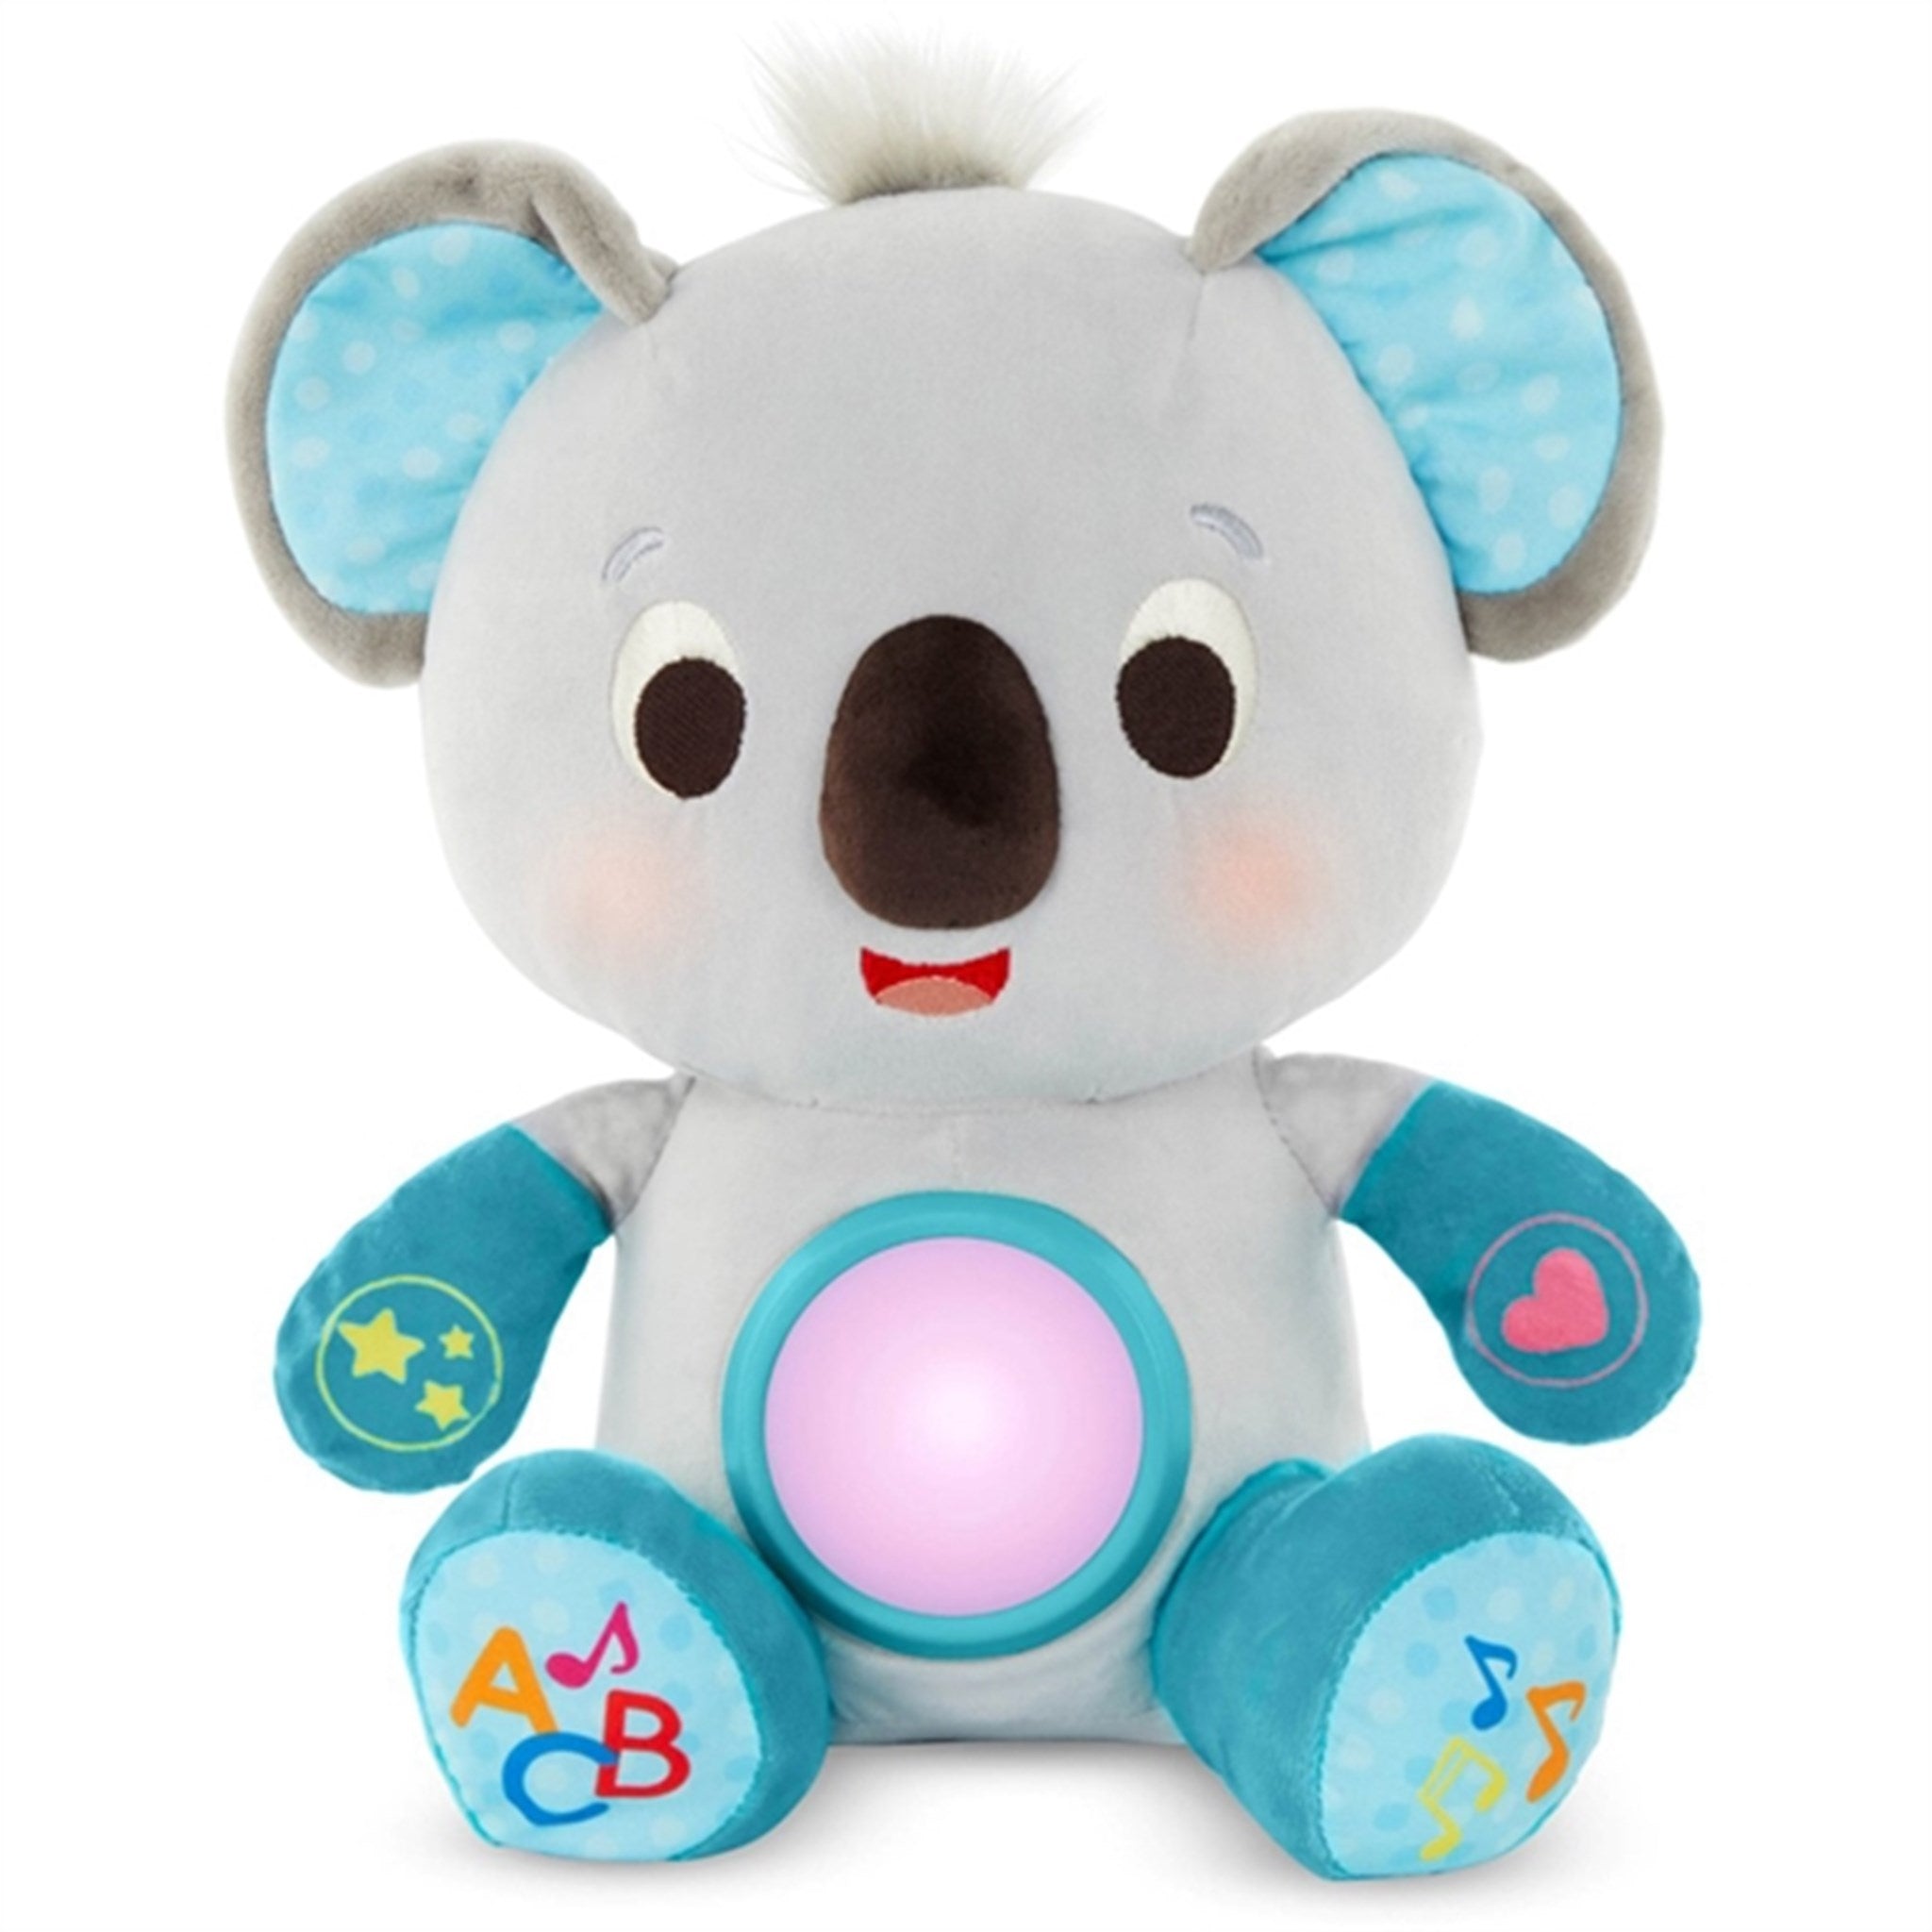 B-toys Talking Koala Interaktiv Nallebjörn